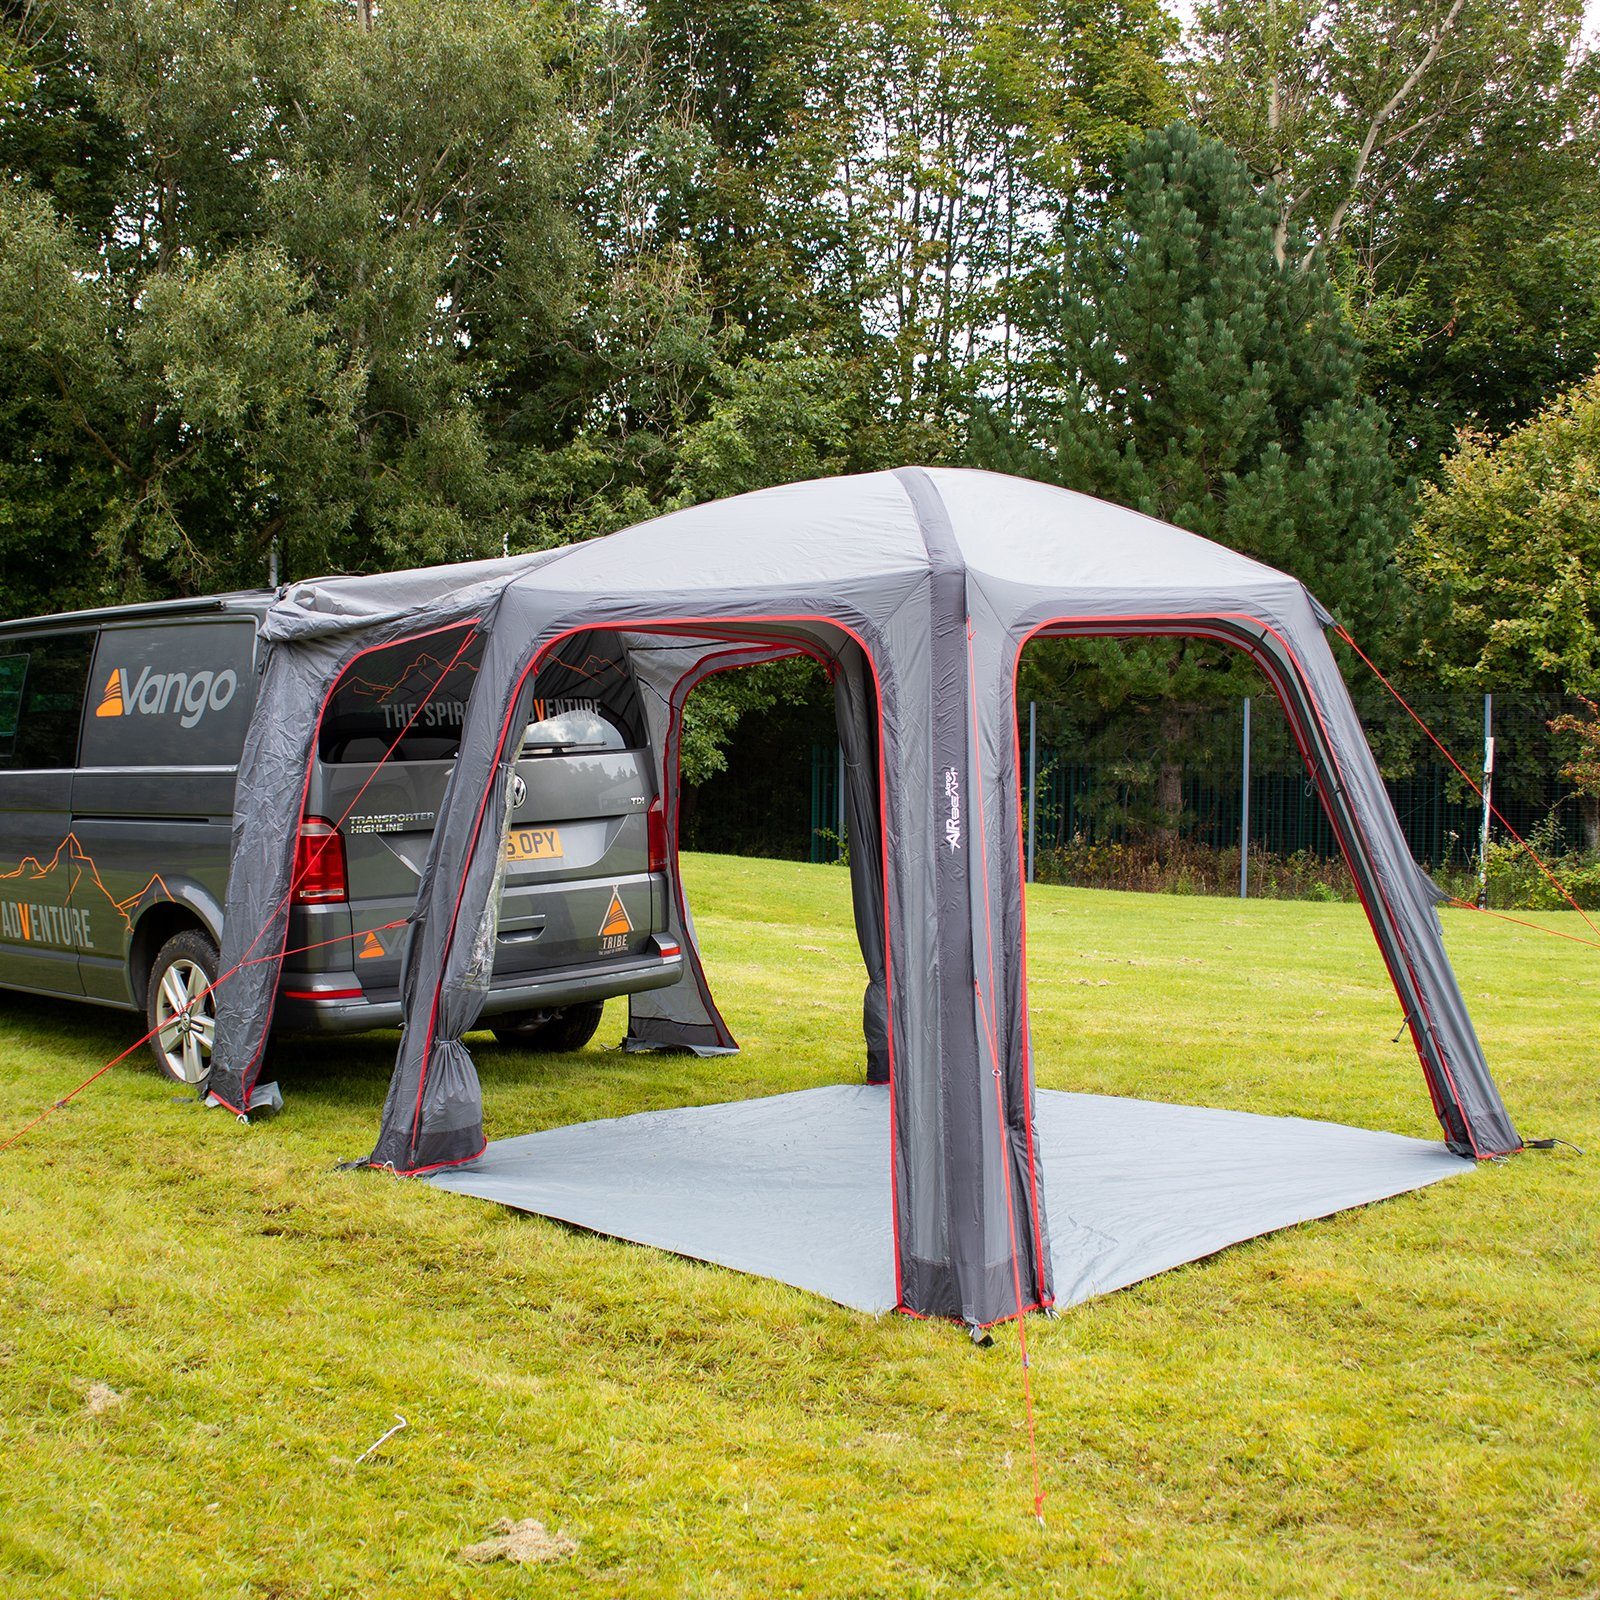 3000 Zelt Vorzelt Vango AirHub Buszelt, Bus Van Camping Tailgate aufblasbares Heckzelt Zelt mm Low